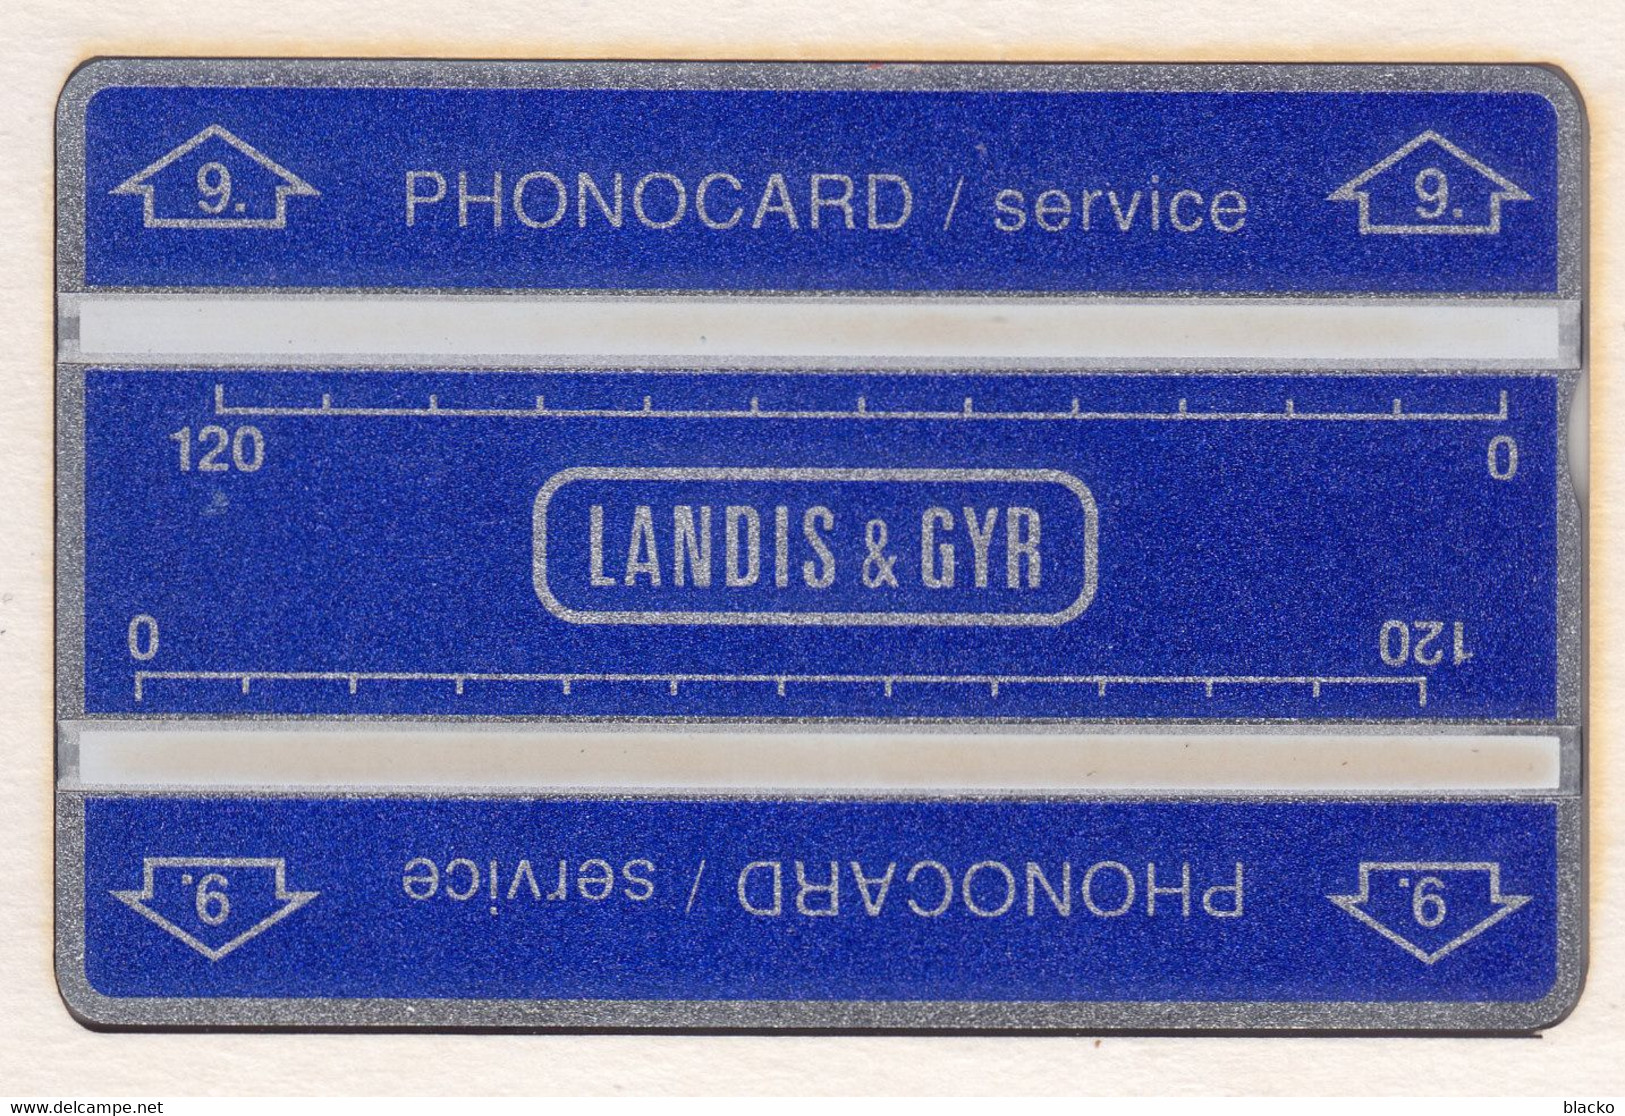 Netherlands - 1993 Service Card 3mm Notch 9 In Arrow 341K - Dbz04 - Test & Service